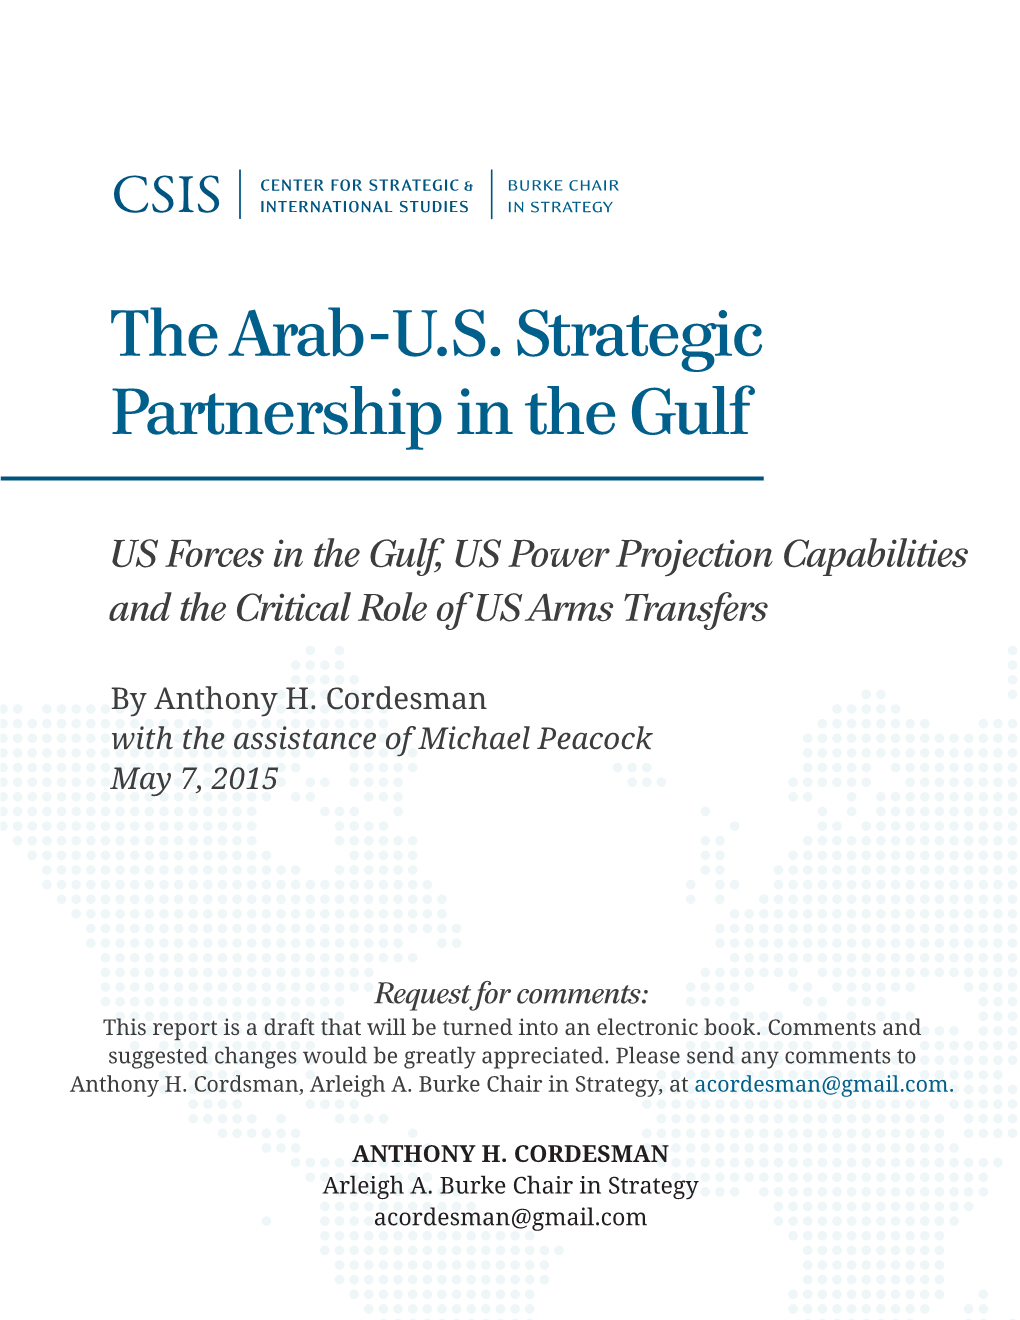 The Arab-U.S. Strategic Partnership in the Gulf